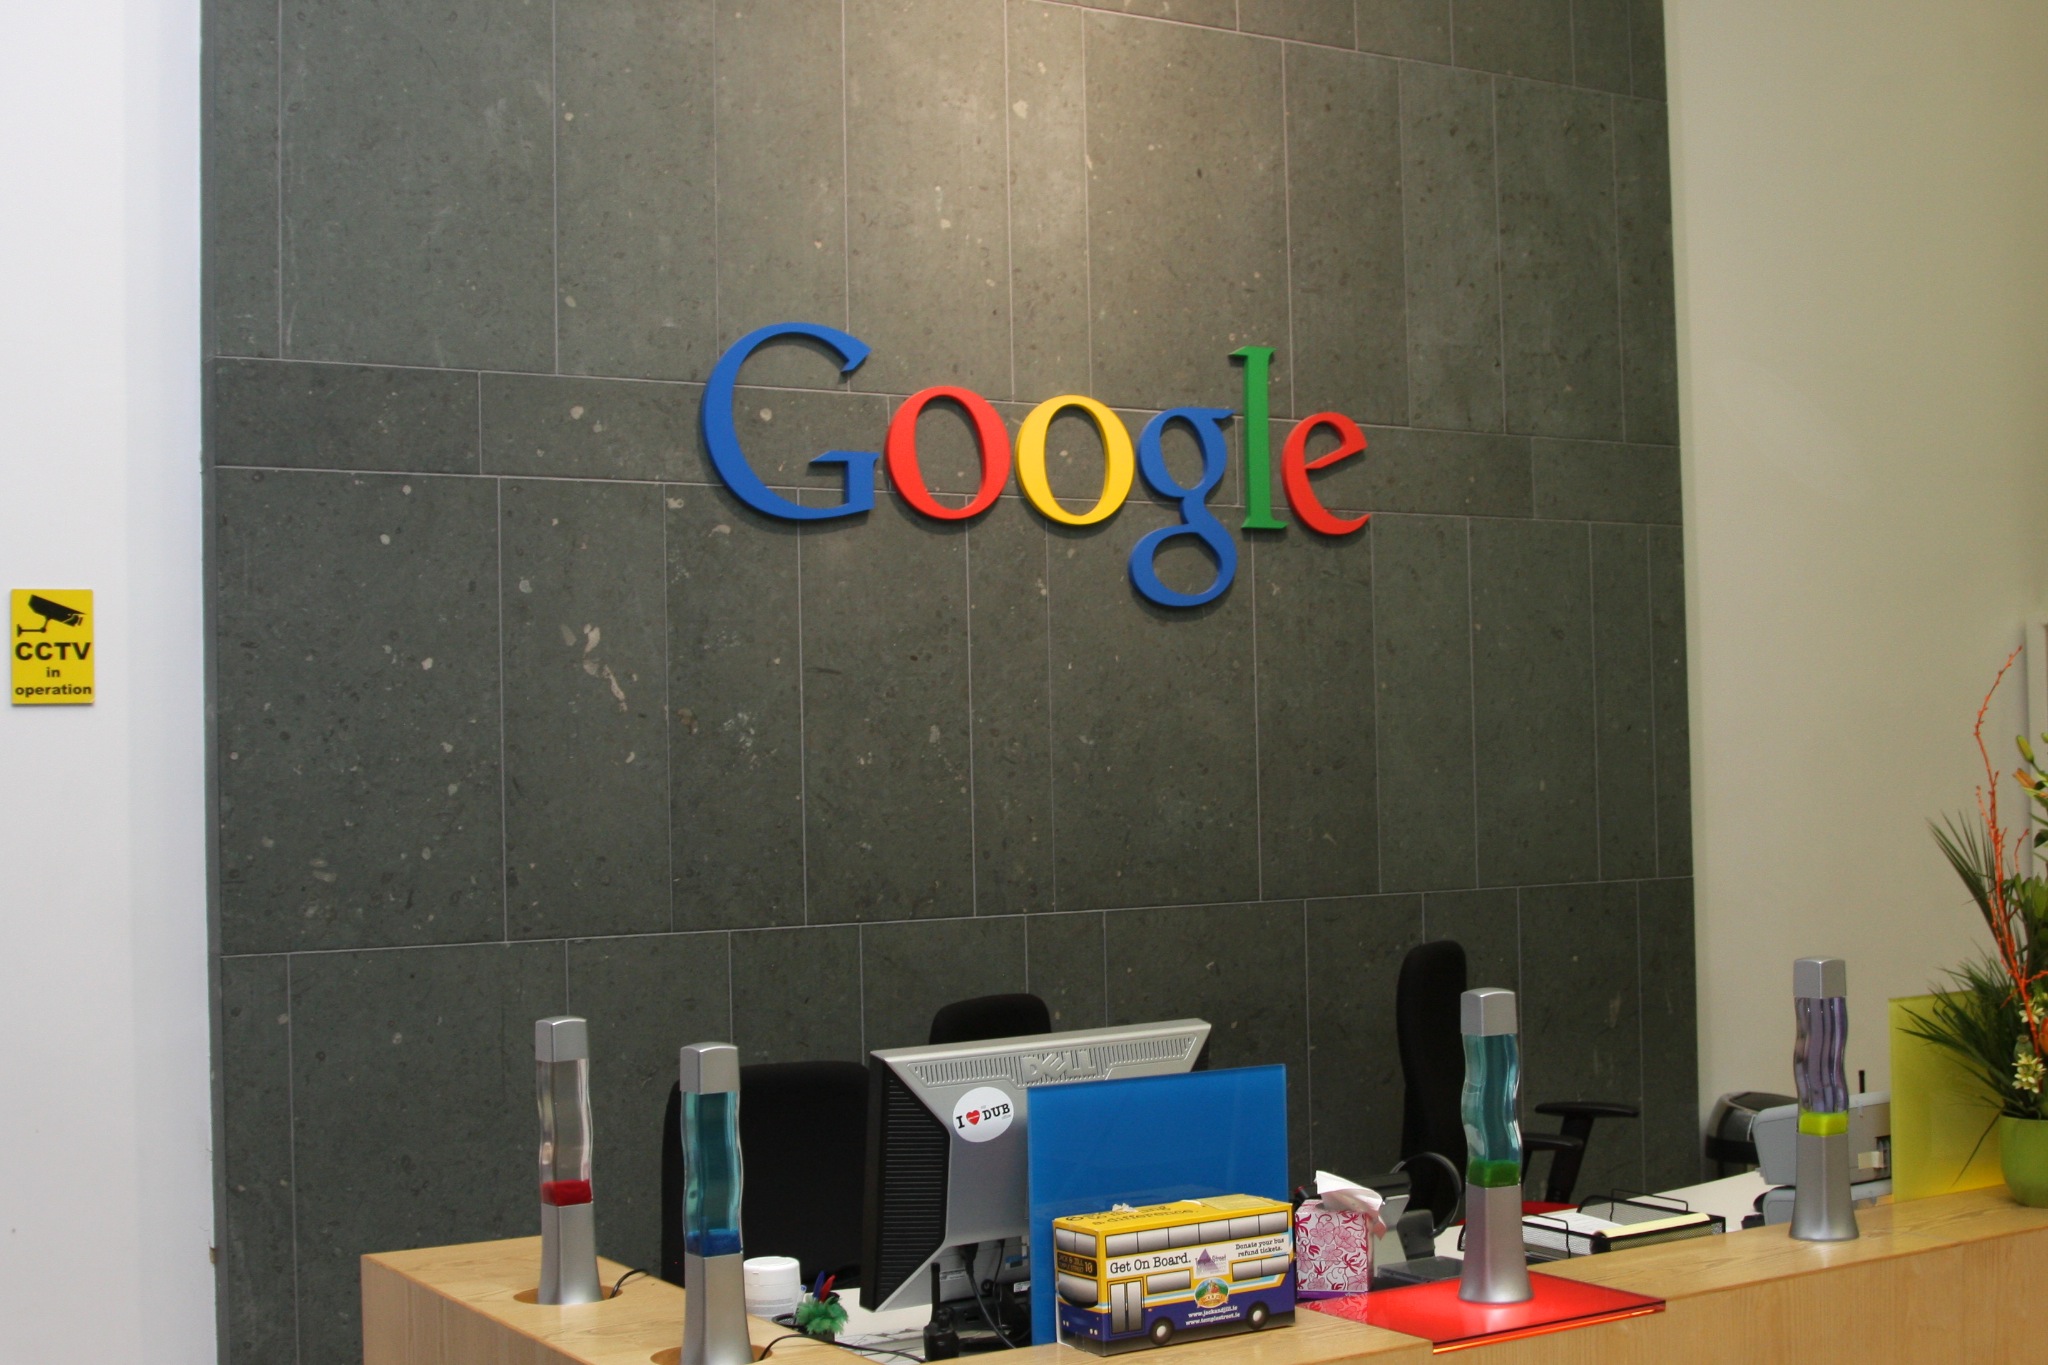 Google offices in Dublin. Credit: Darren McCarra